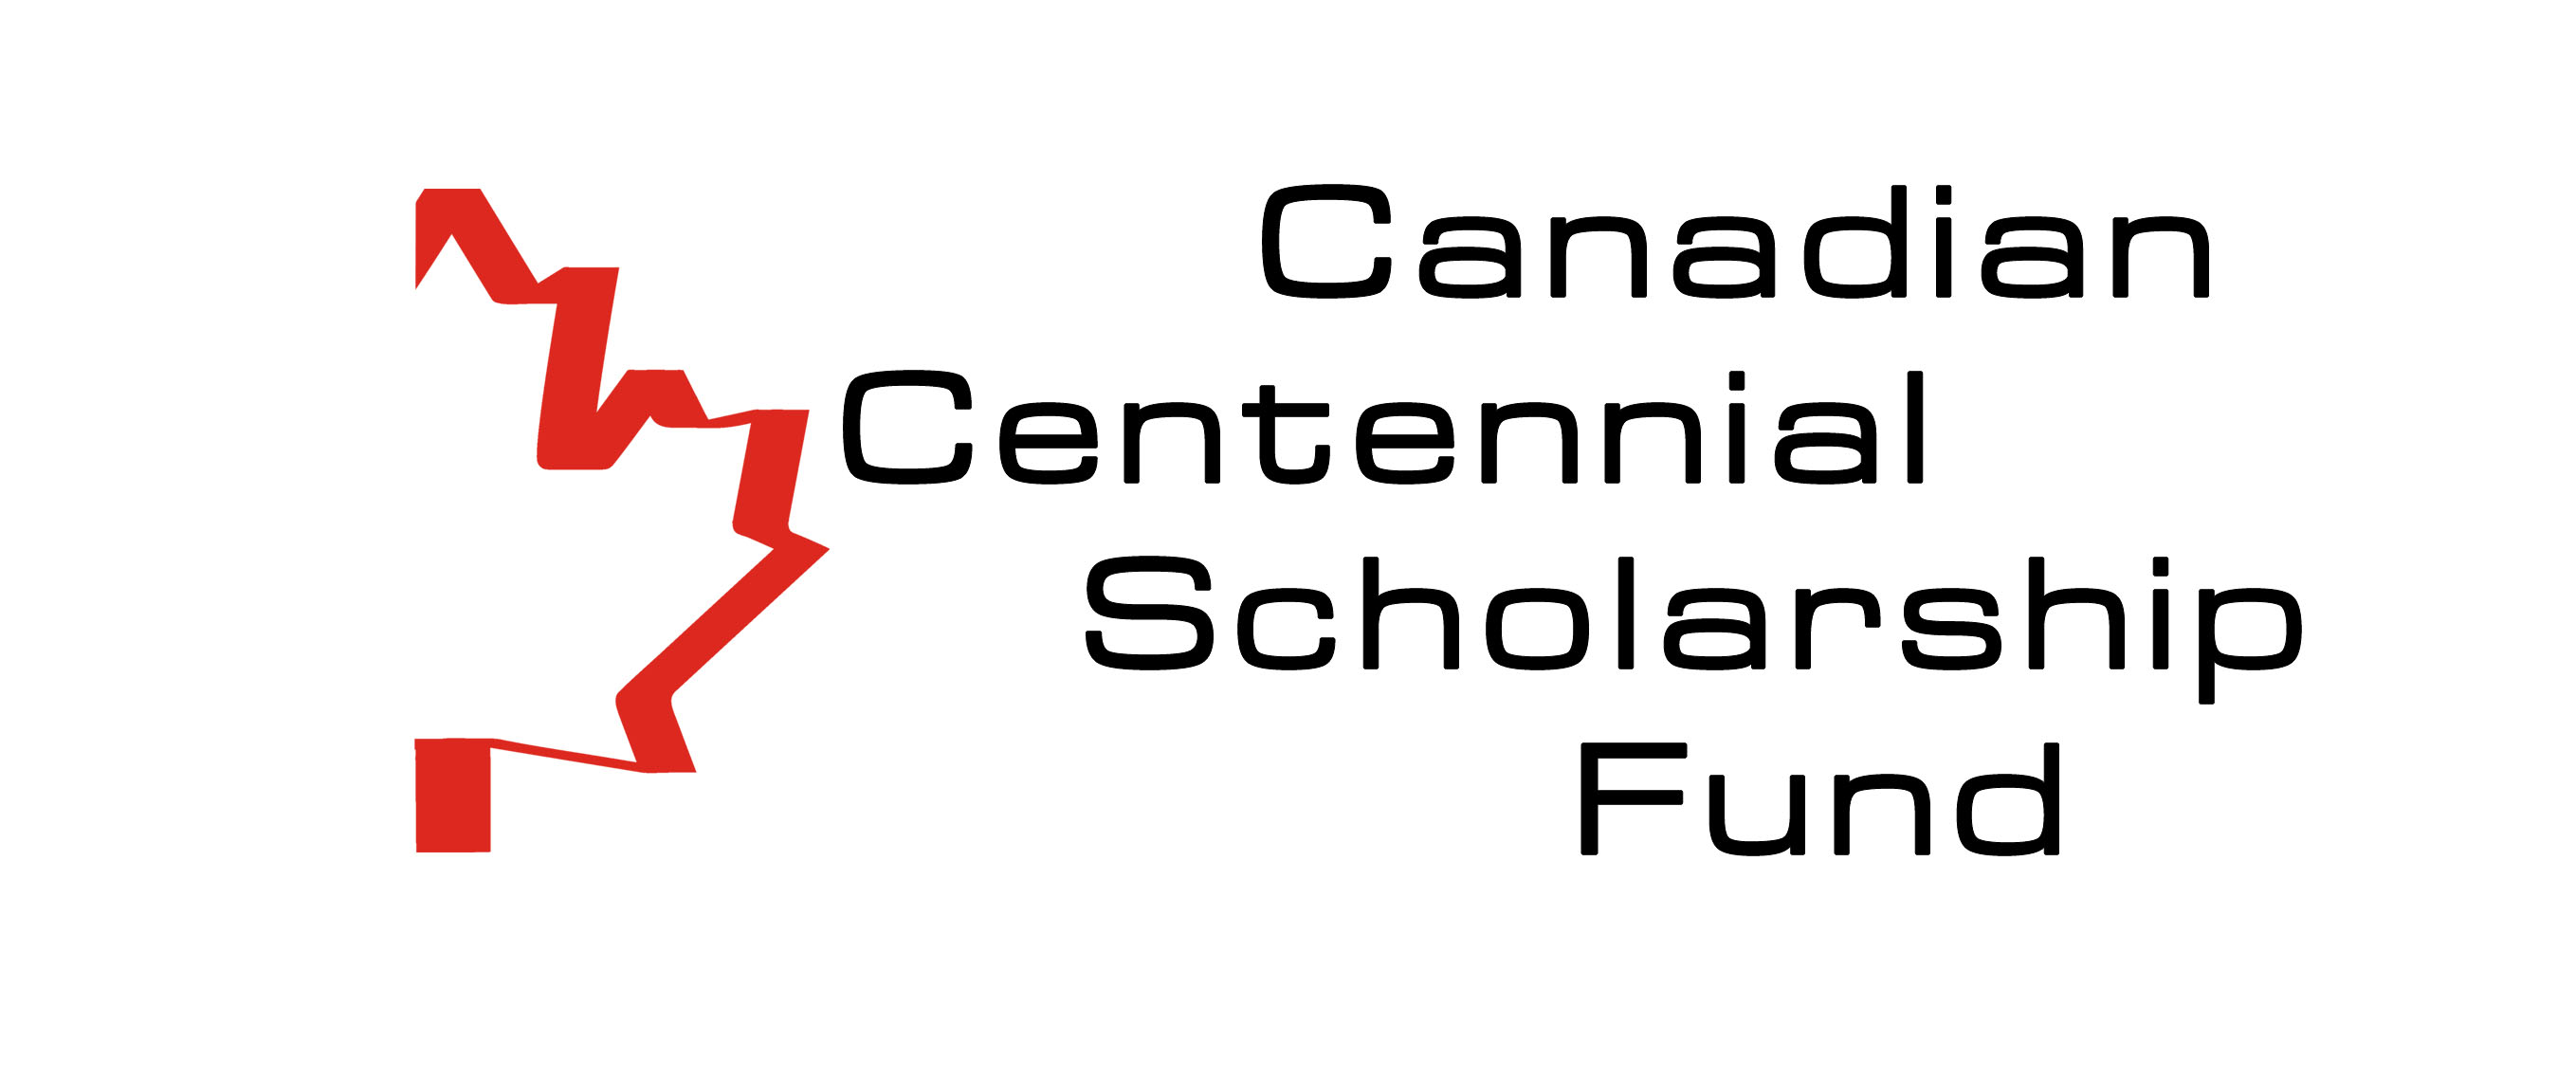 Canadian Centennial Scholarship Fund (CCSF) logo